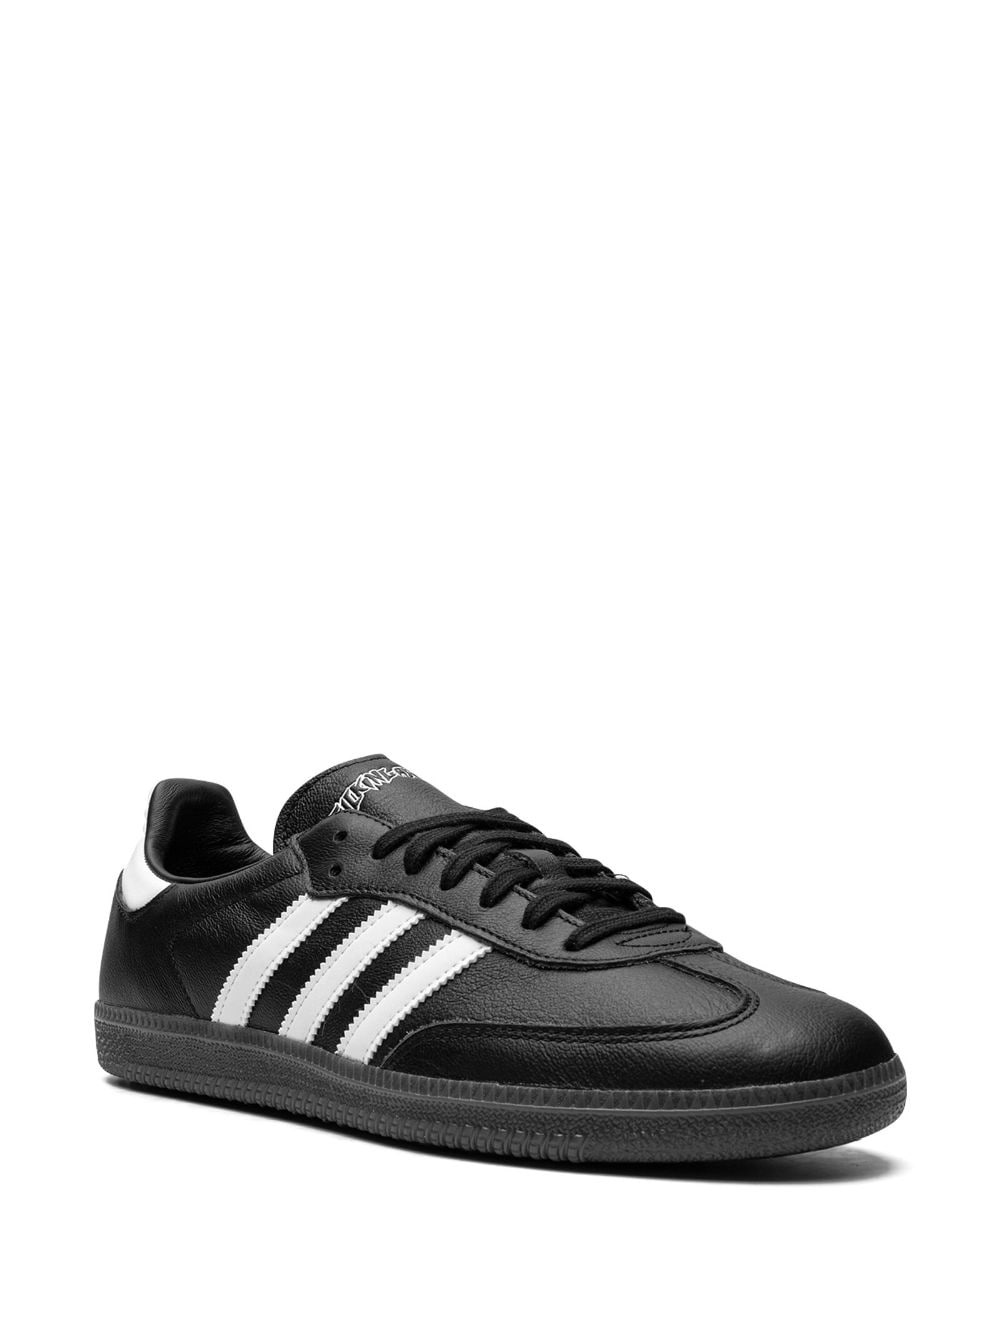 x FA Samba "Black/White" sneakers - 2